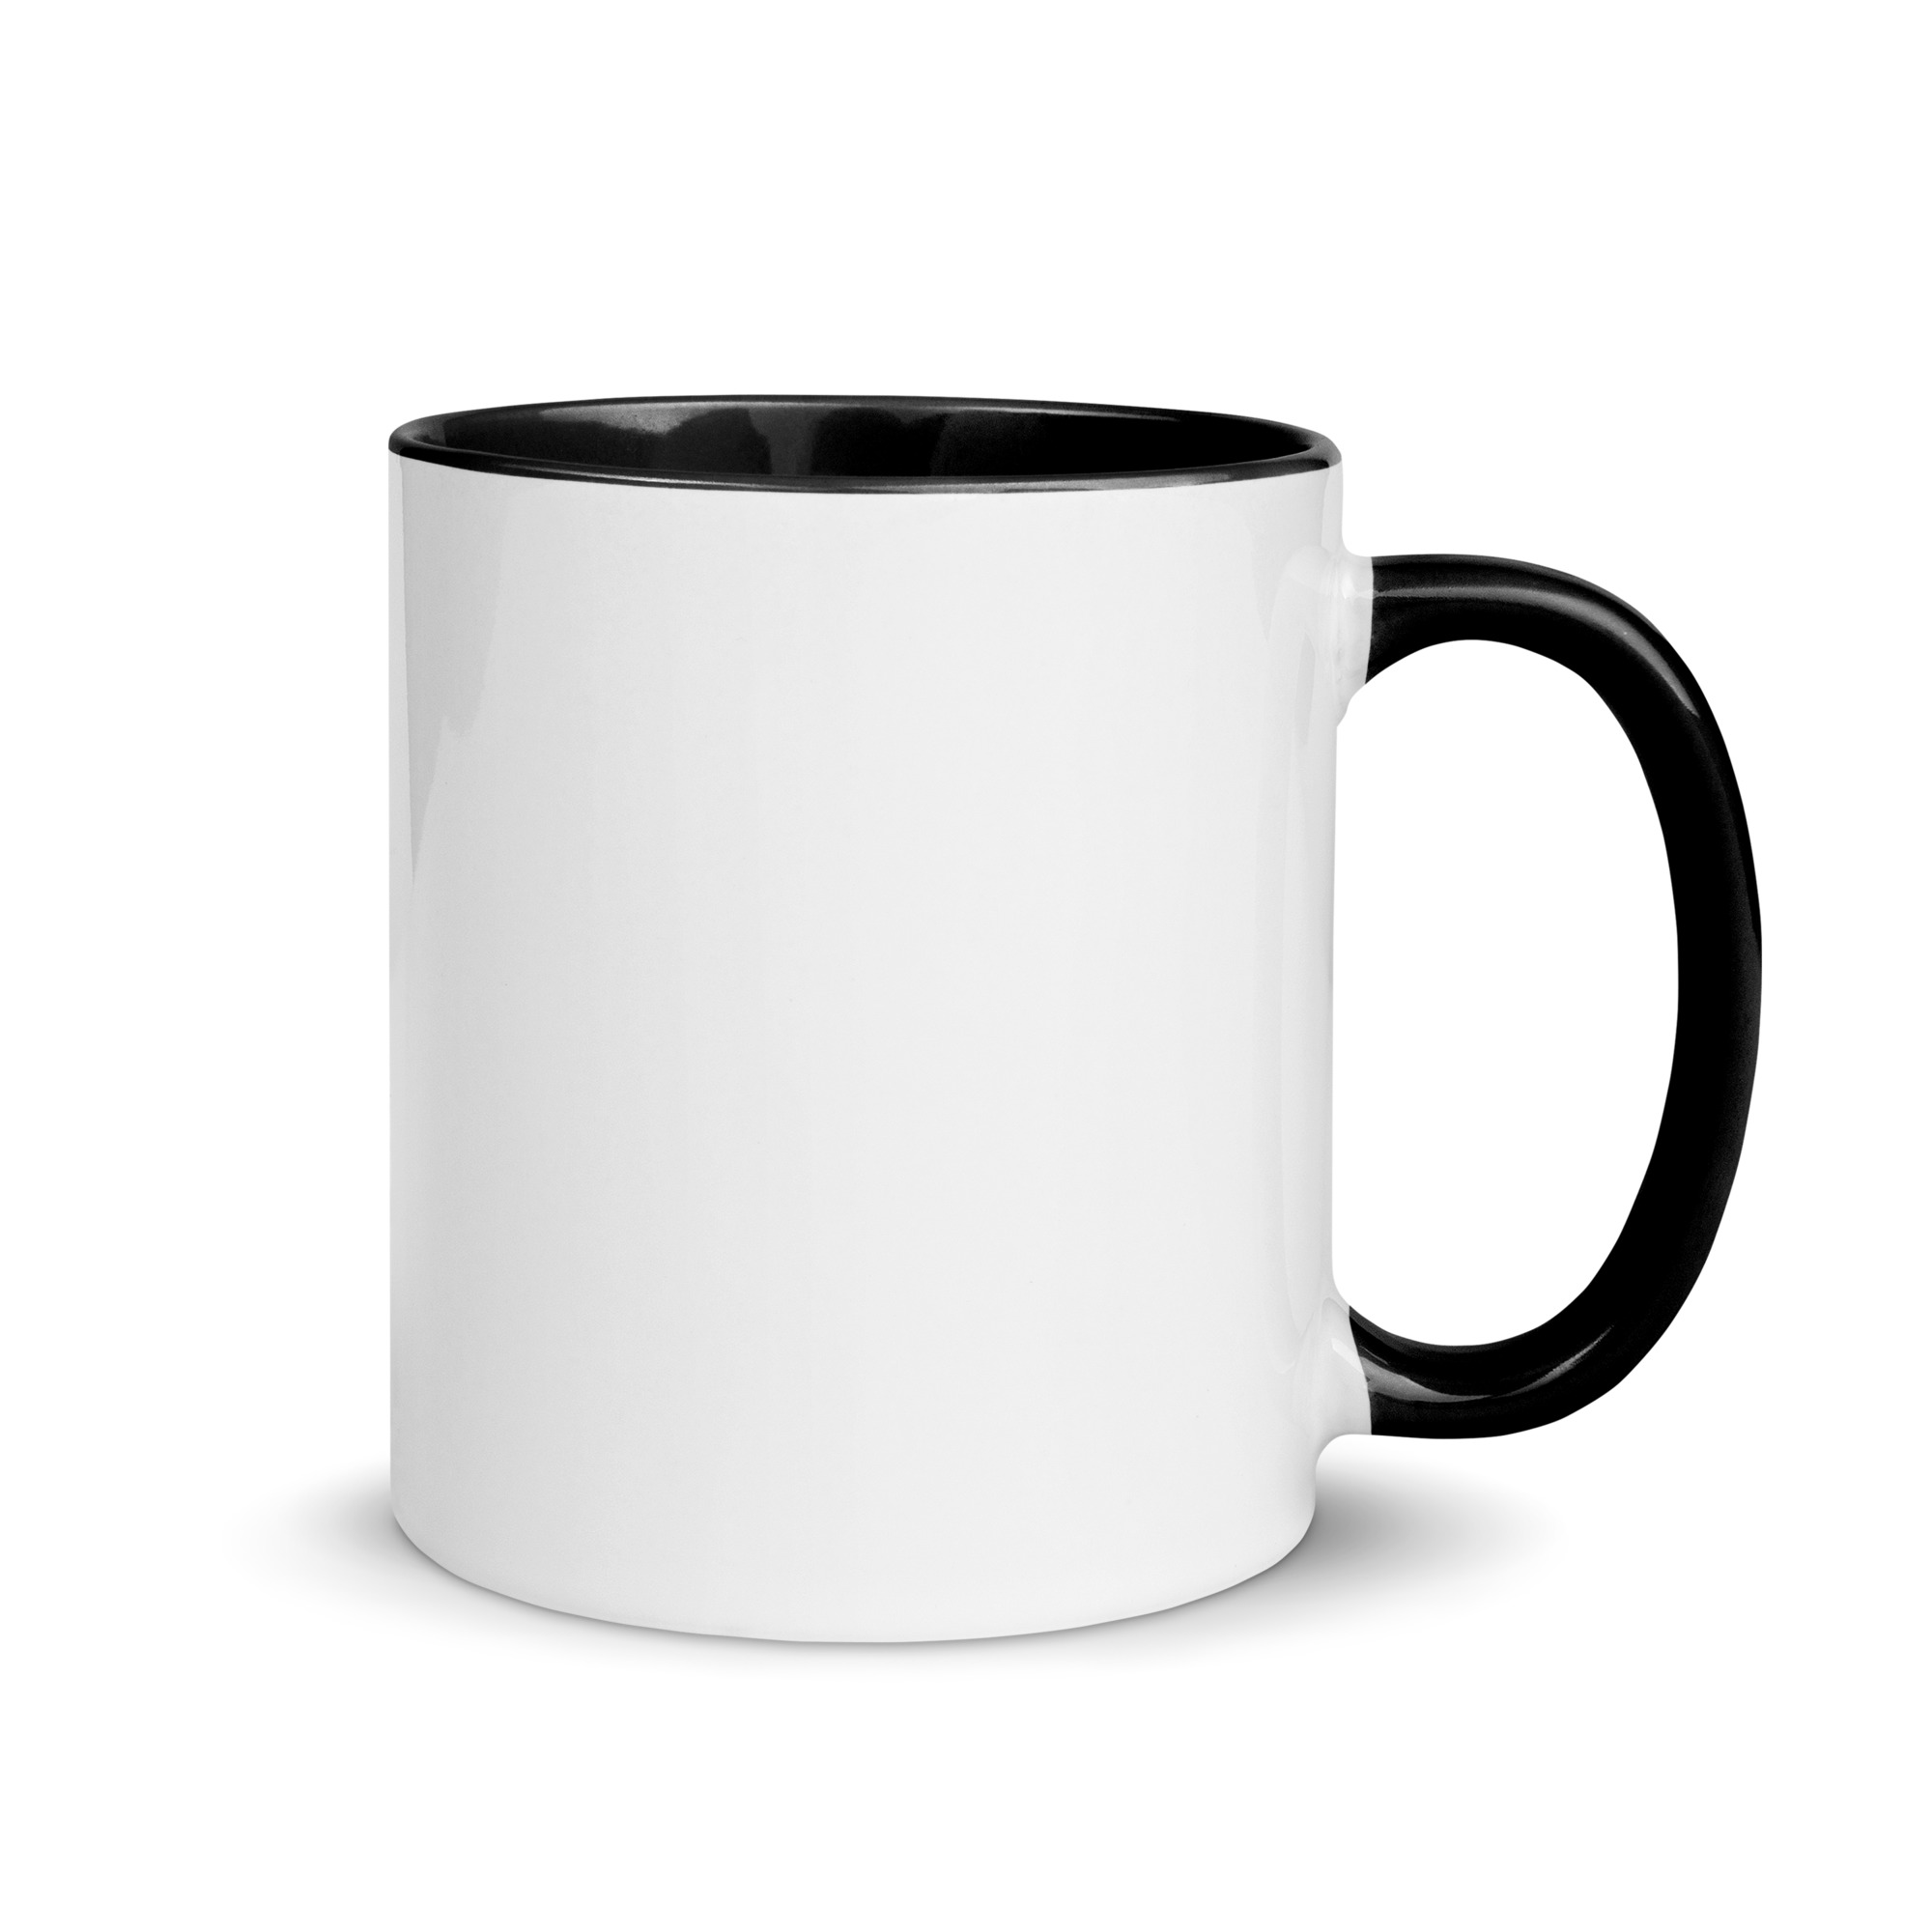 white-ceramic-mug-with-color-inside-black-11oz-right-63277f2f80349.jpg